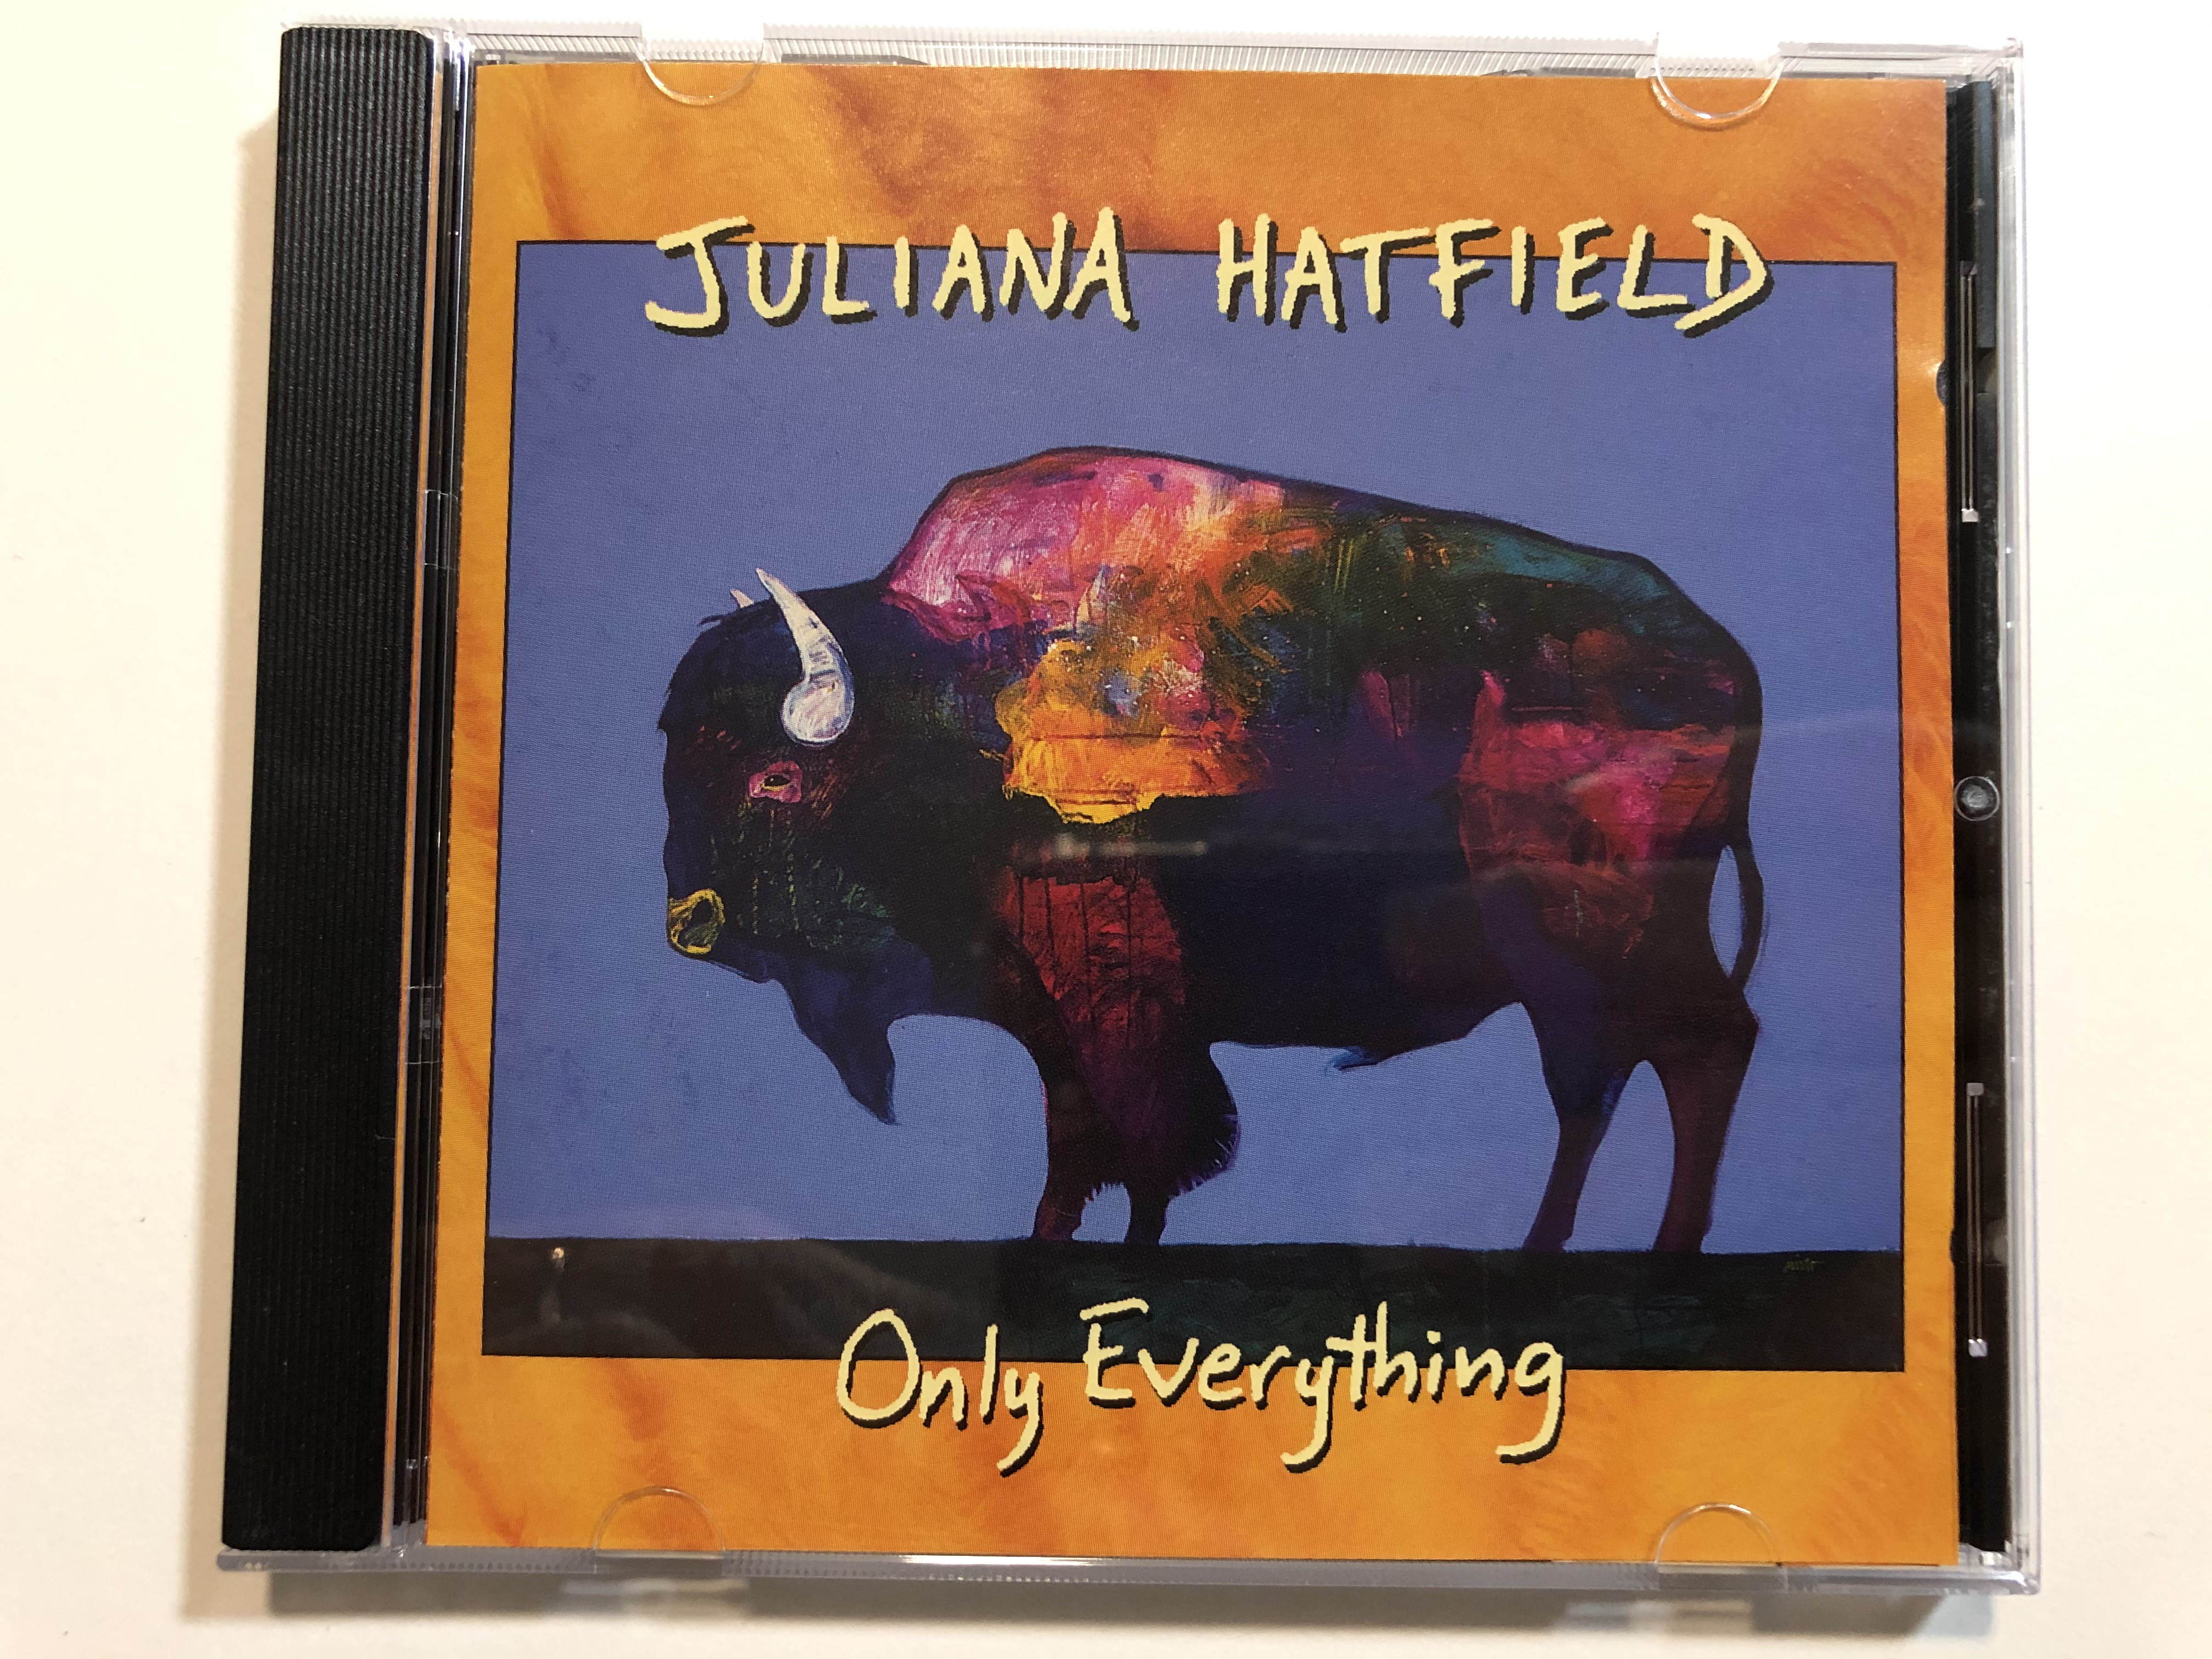 juliana-hatfield-only-everything-eastwest-audio-cd-1995-4509-99886-2-1-.jpg